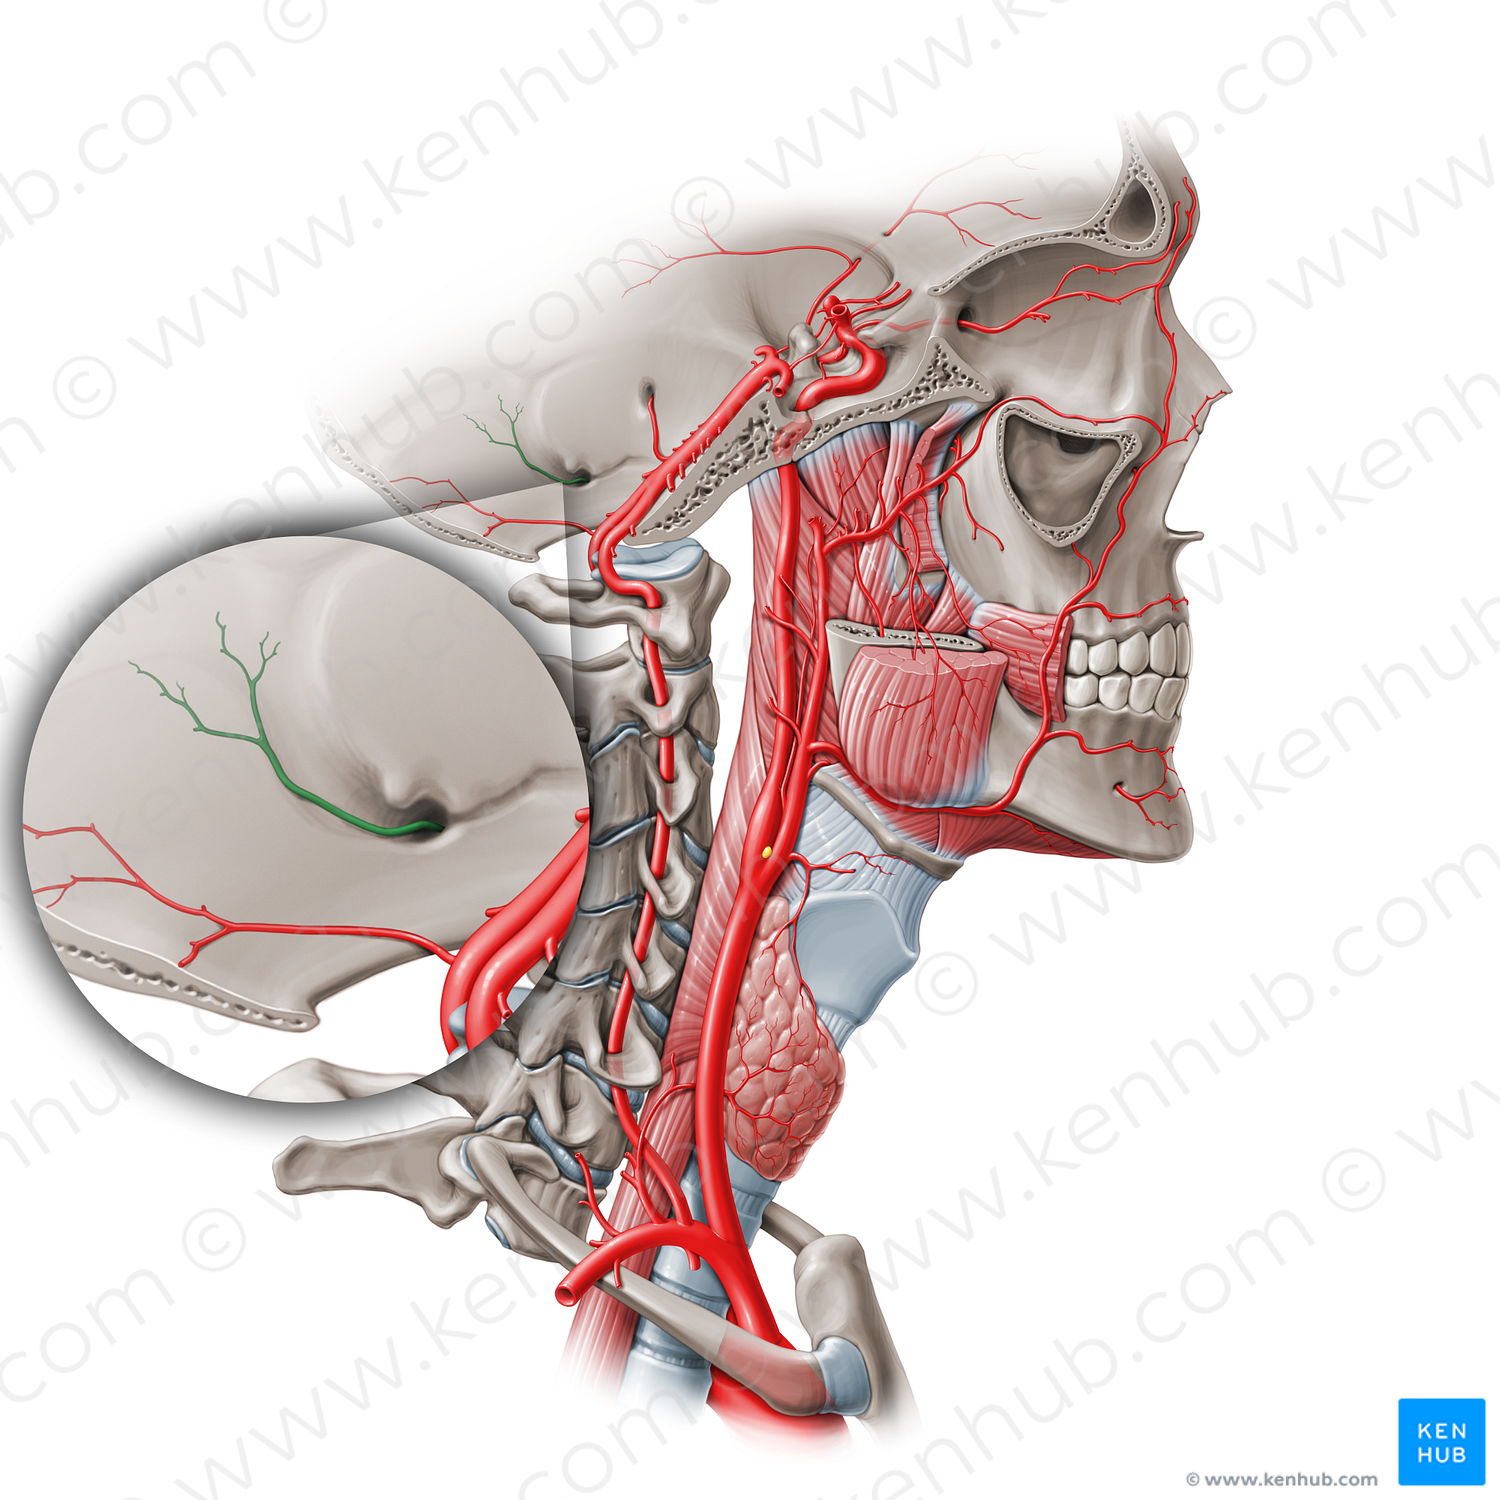 Posterior meningeal artery (#409)